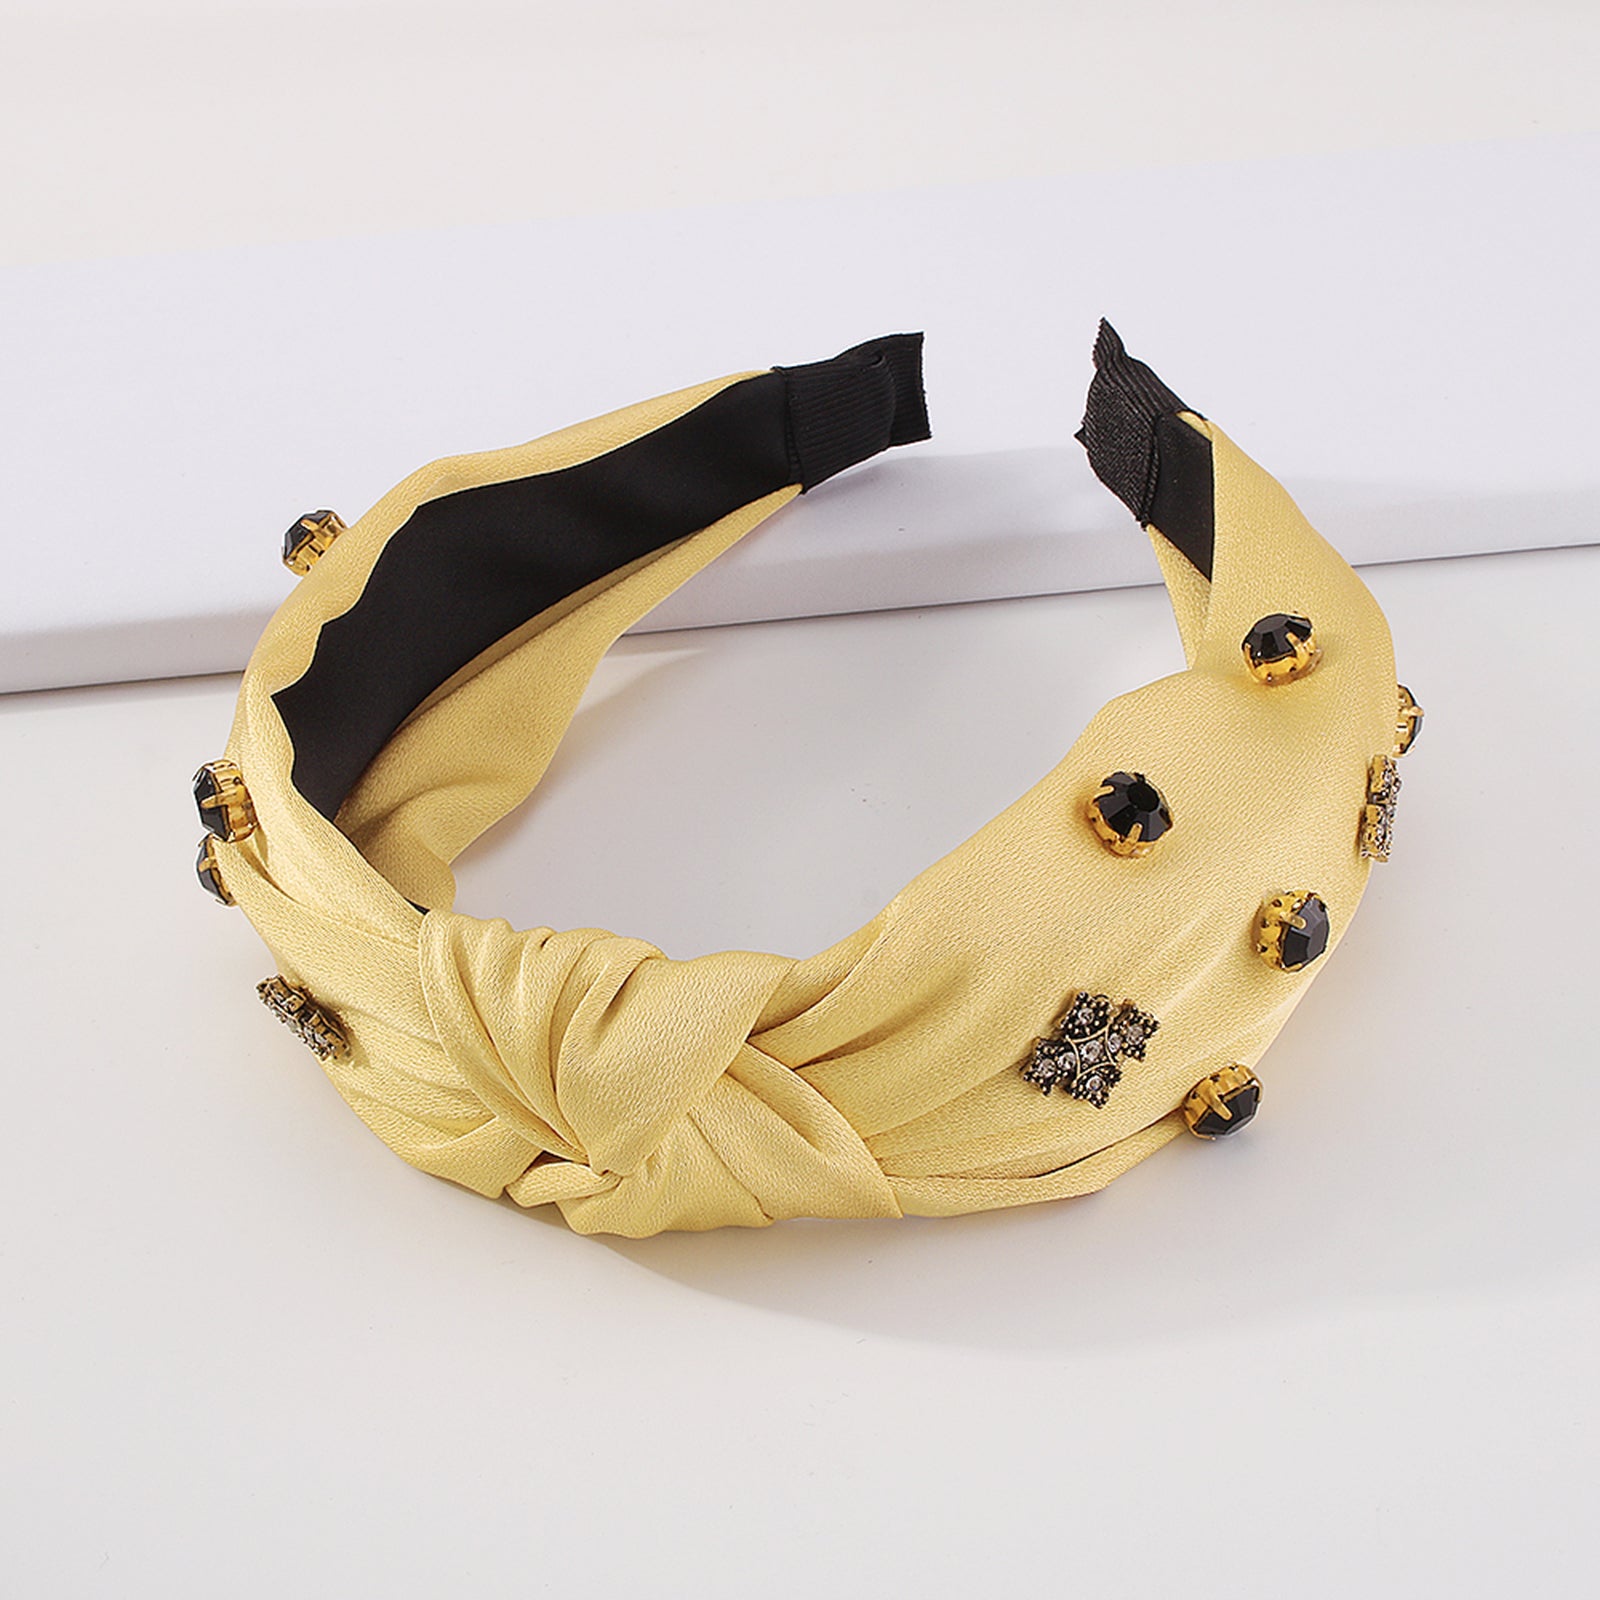 Large Black Rhinestone Classic Topknot Headband medyjewelry